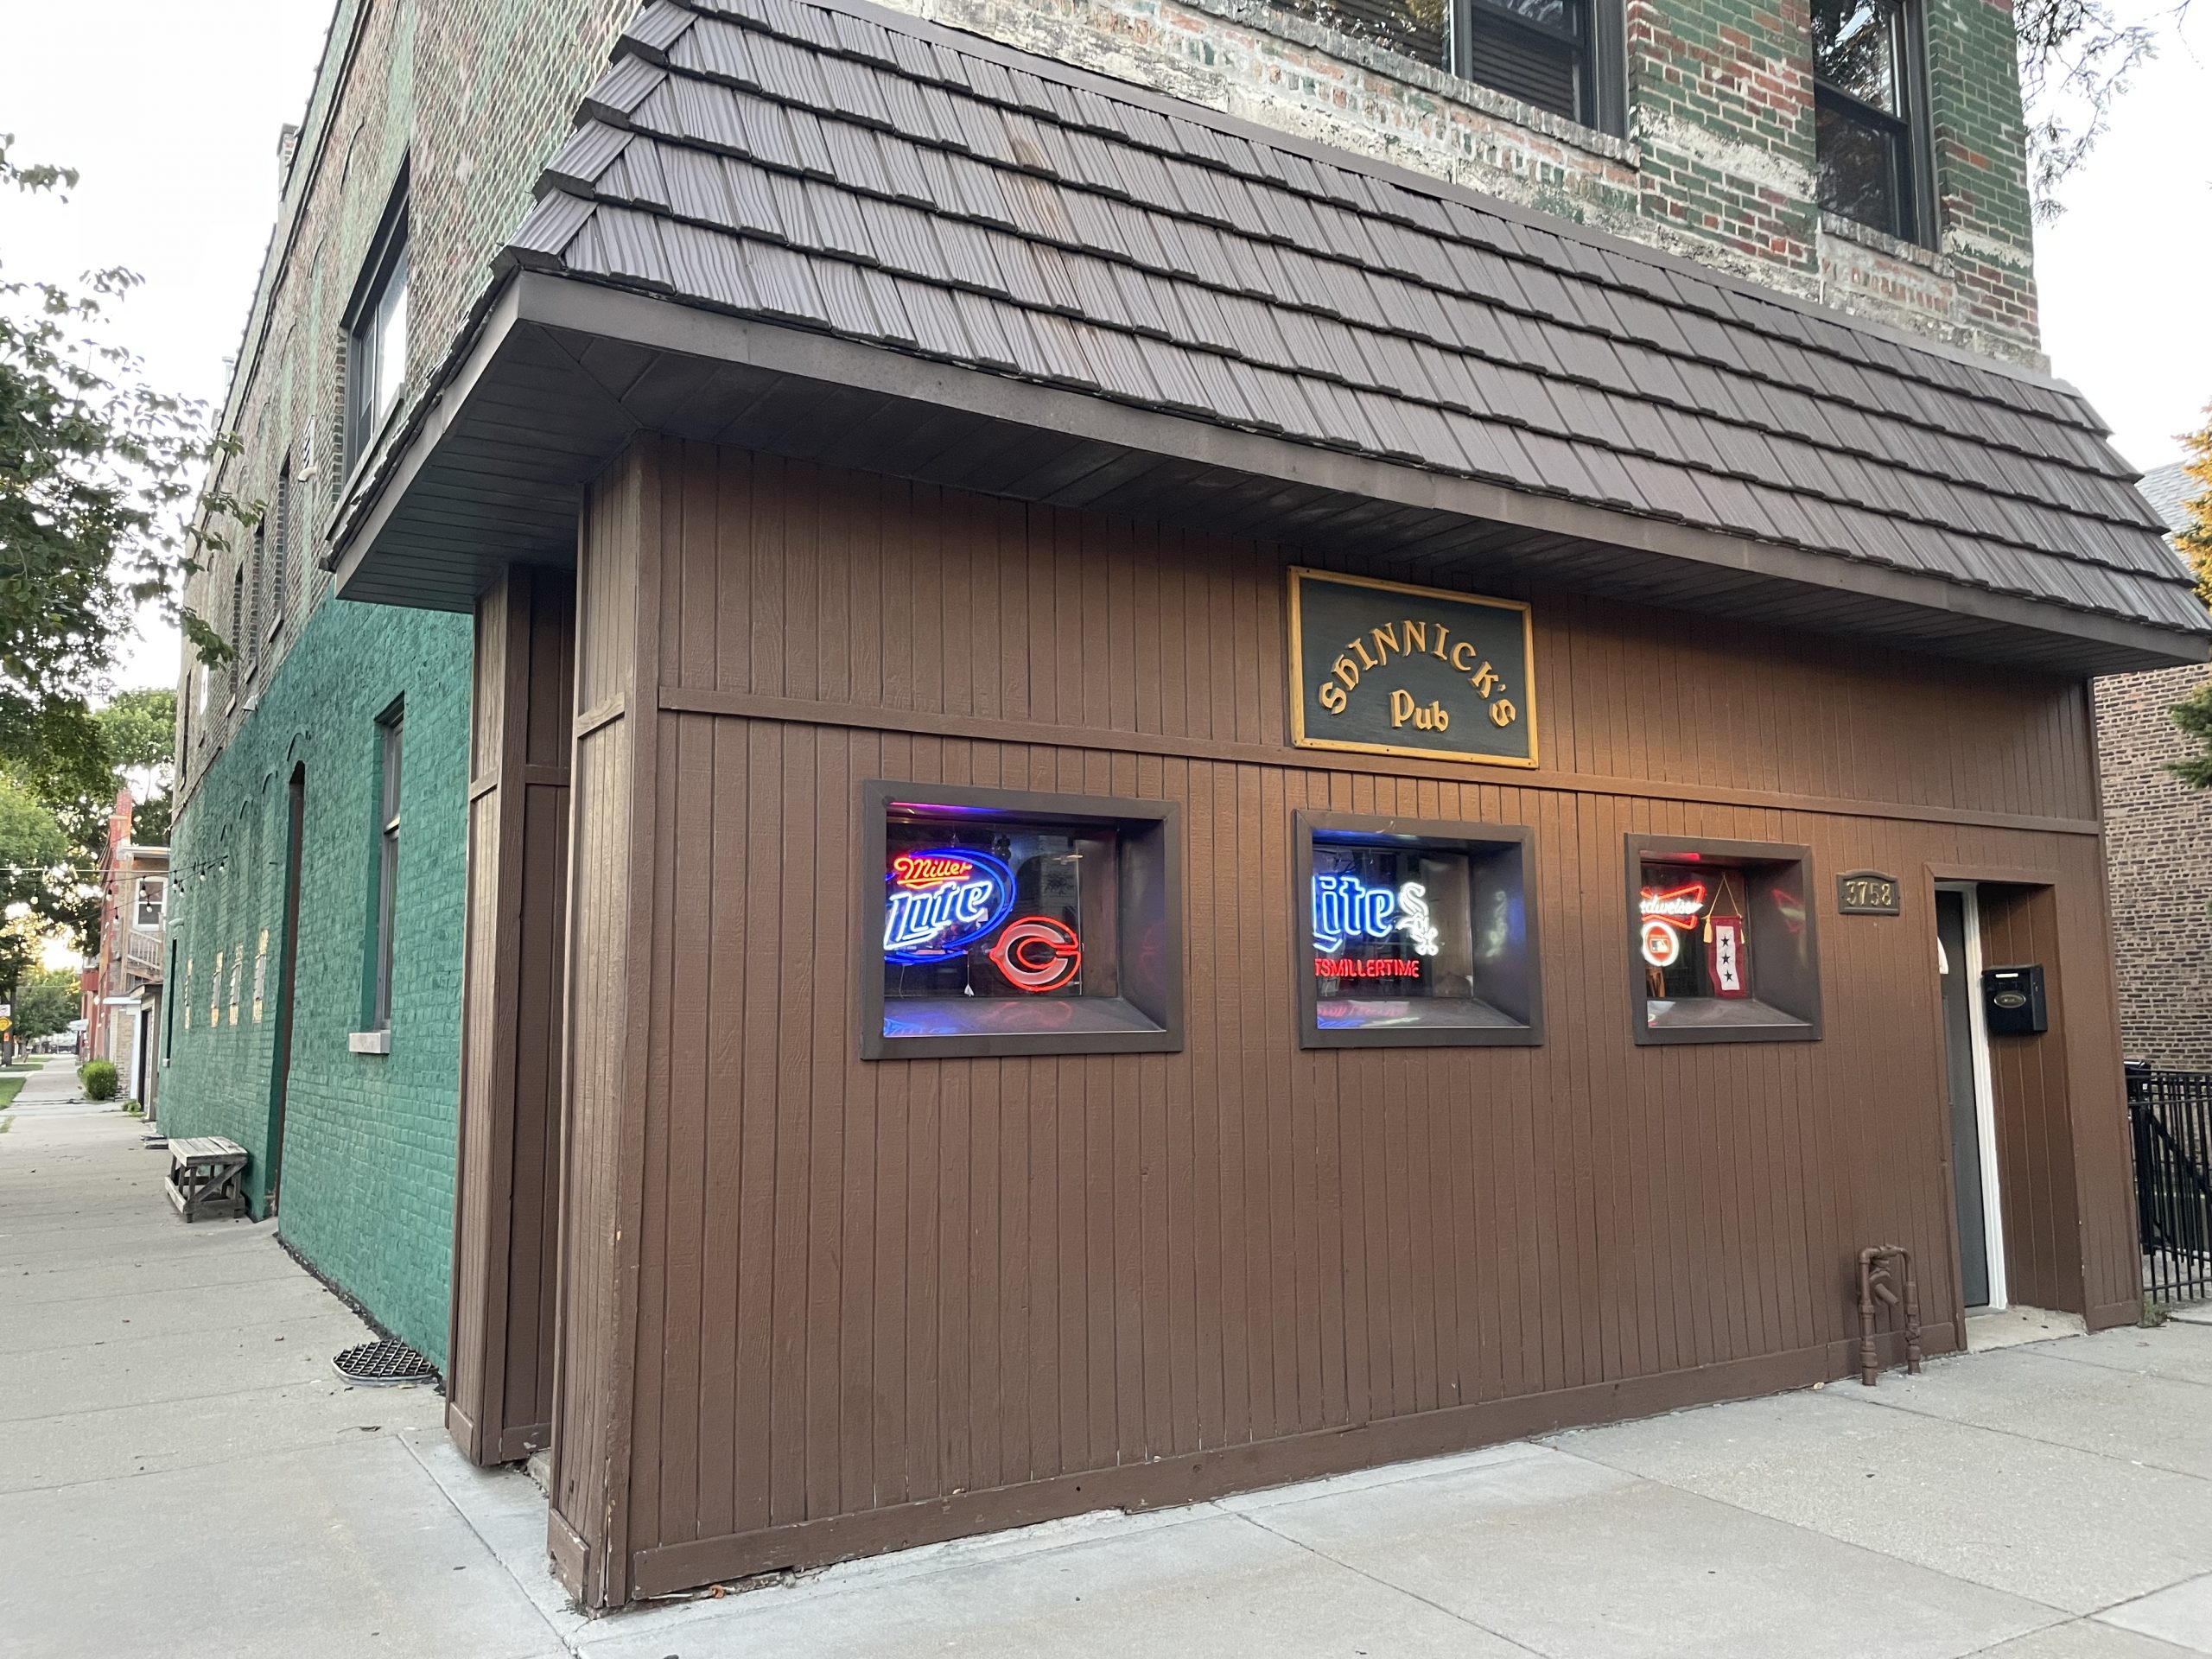 Shinnick's Pub - Chicago Dive Bar - Exterior